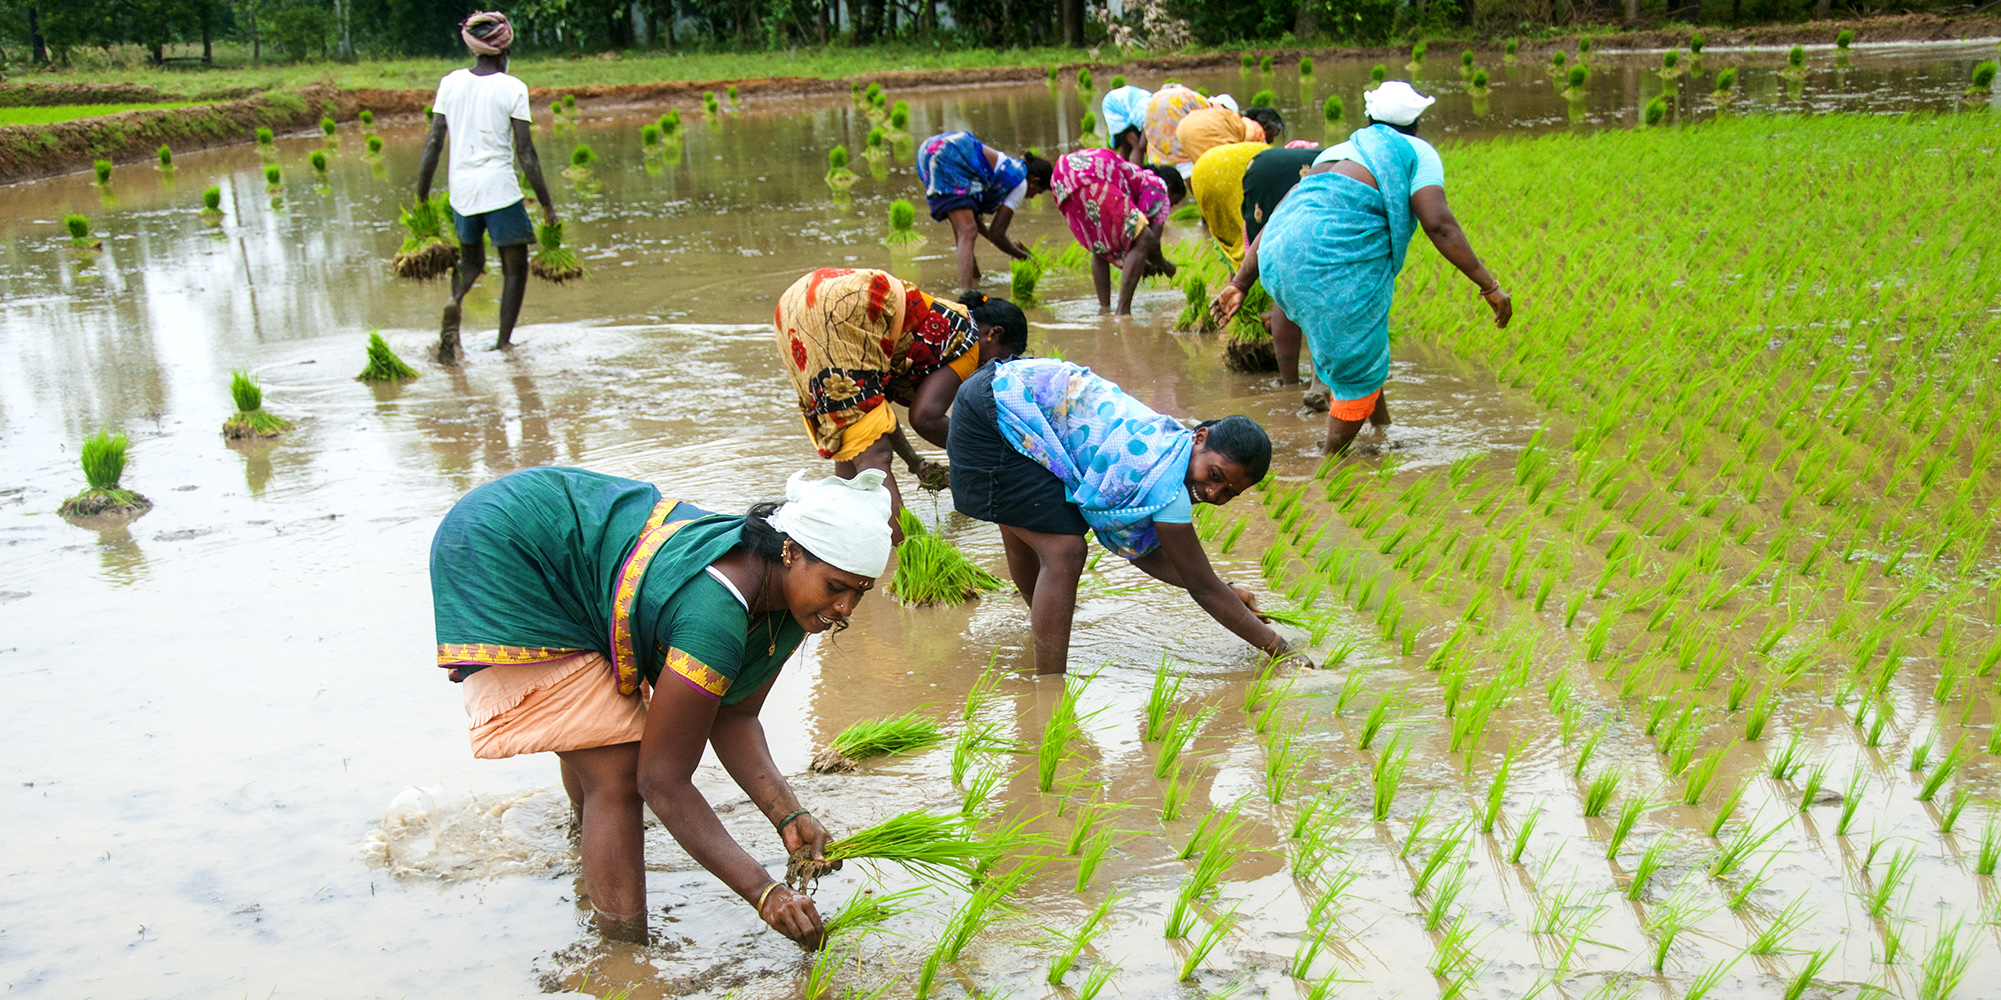 Group of women working in rice fields